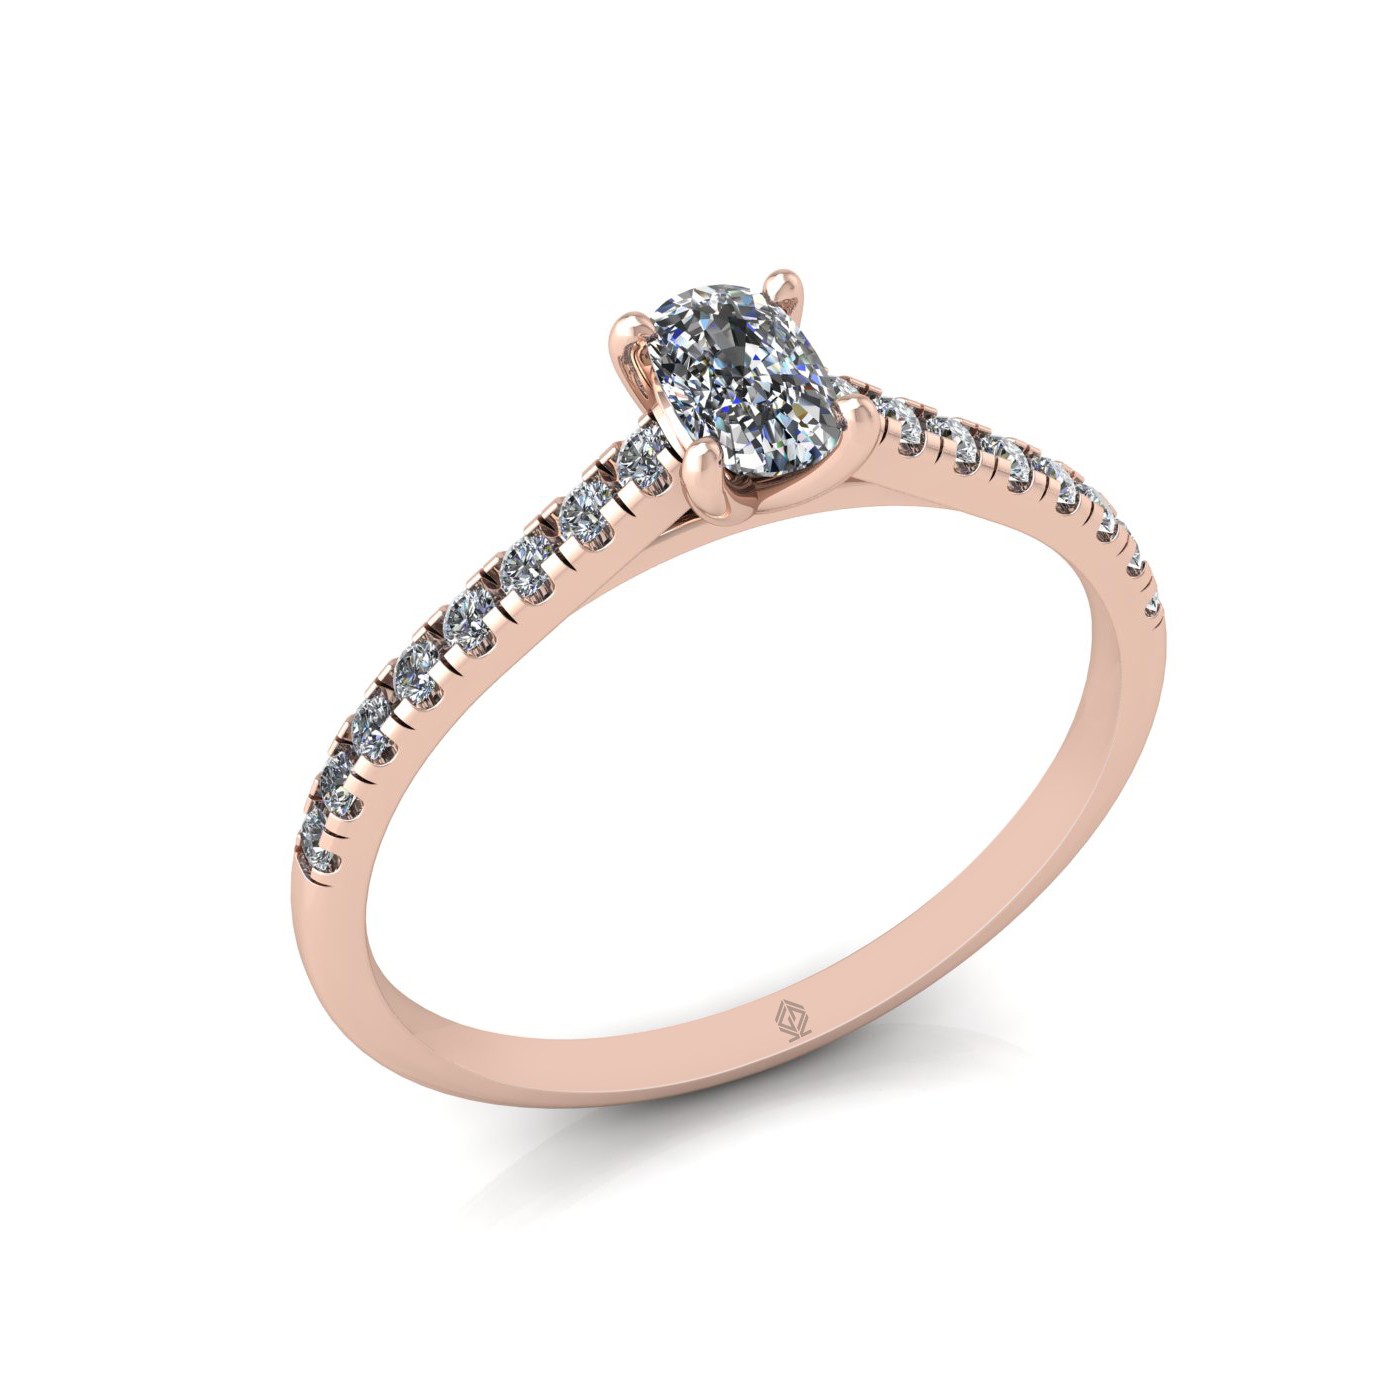 18k rose gold  4 prongs elongated cushion cut diamond engagement ring with whisper thin pavÉ set band